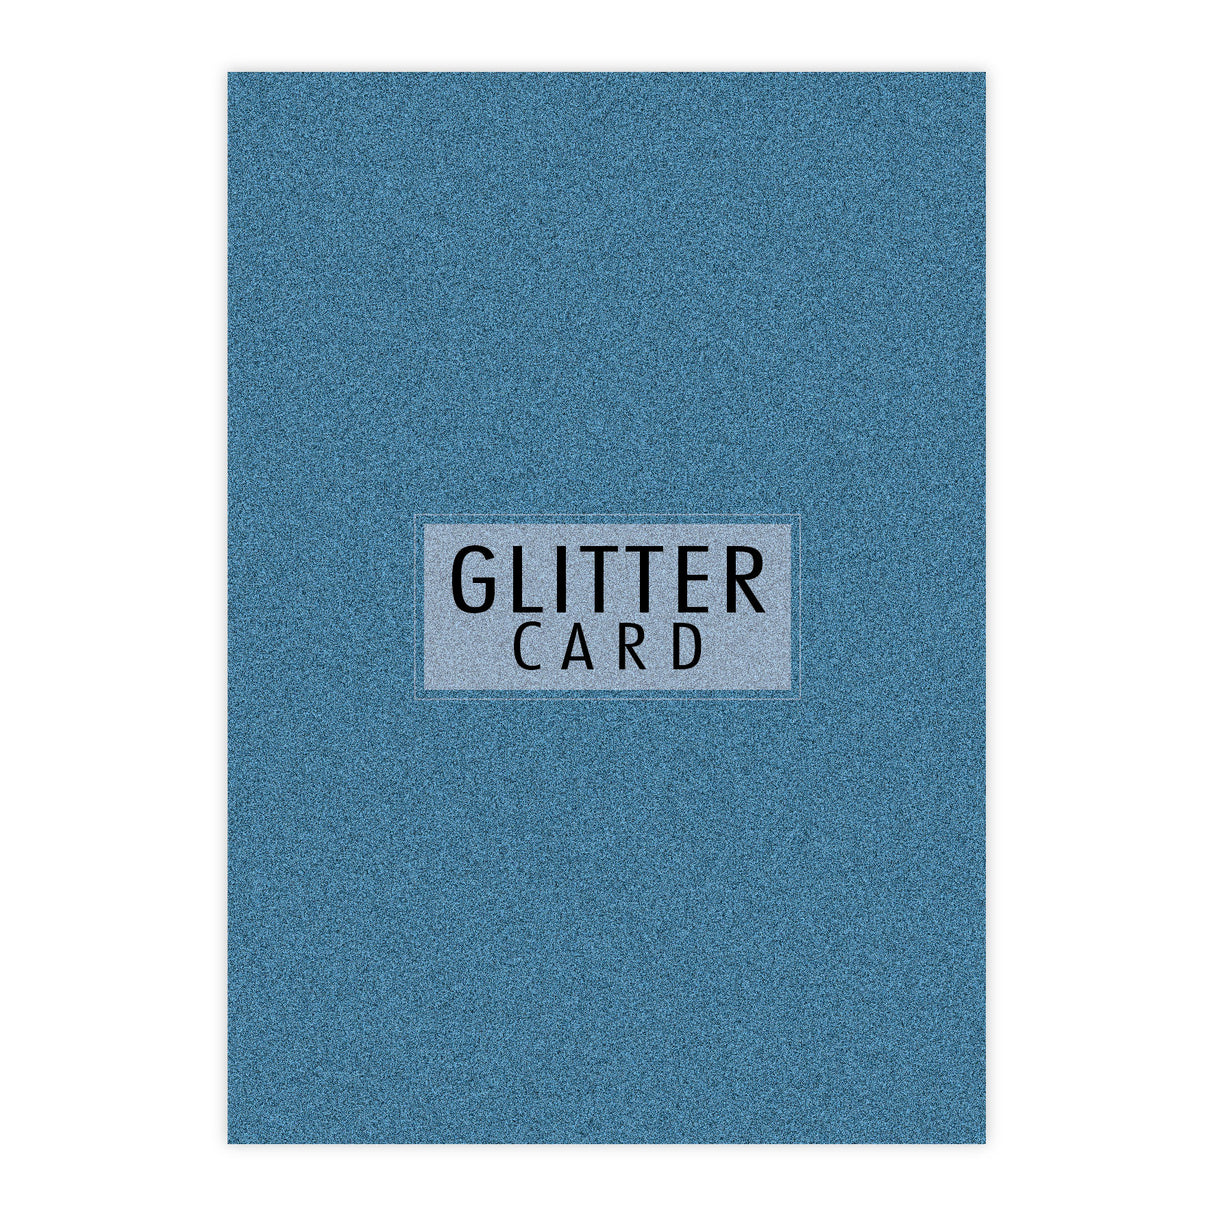 Chloes Creative Cards A4 Glitter Card - Vista